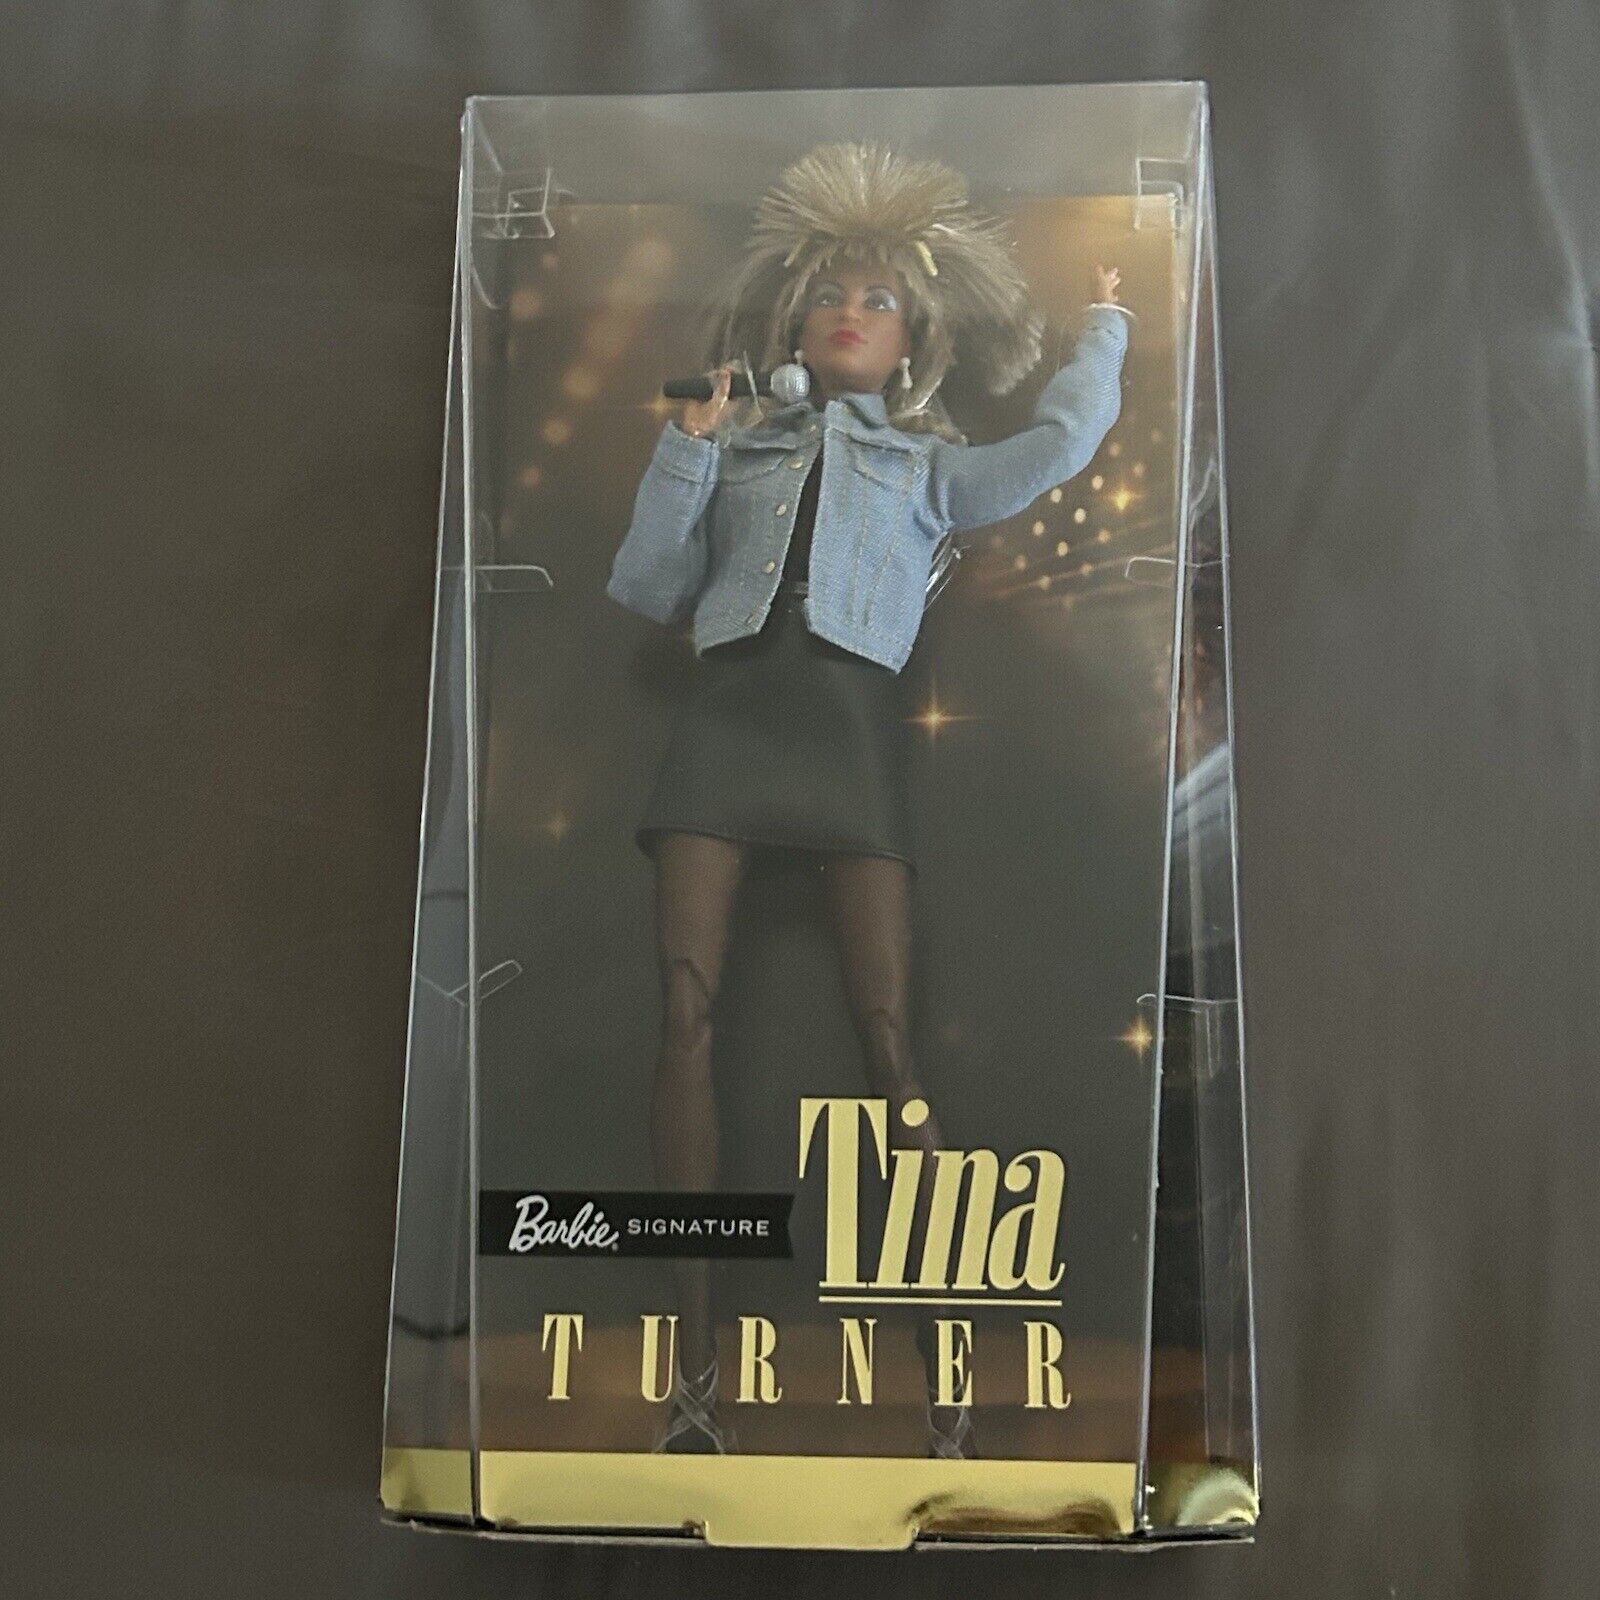 Tina Turner Barbie Signature Music Series in box.